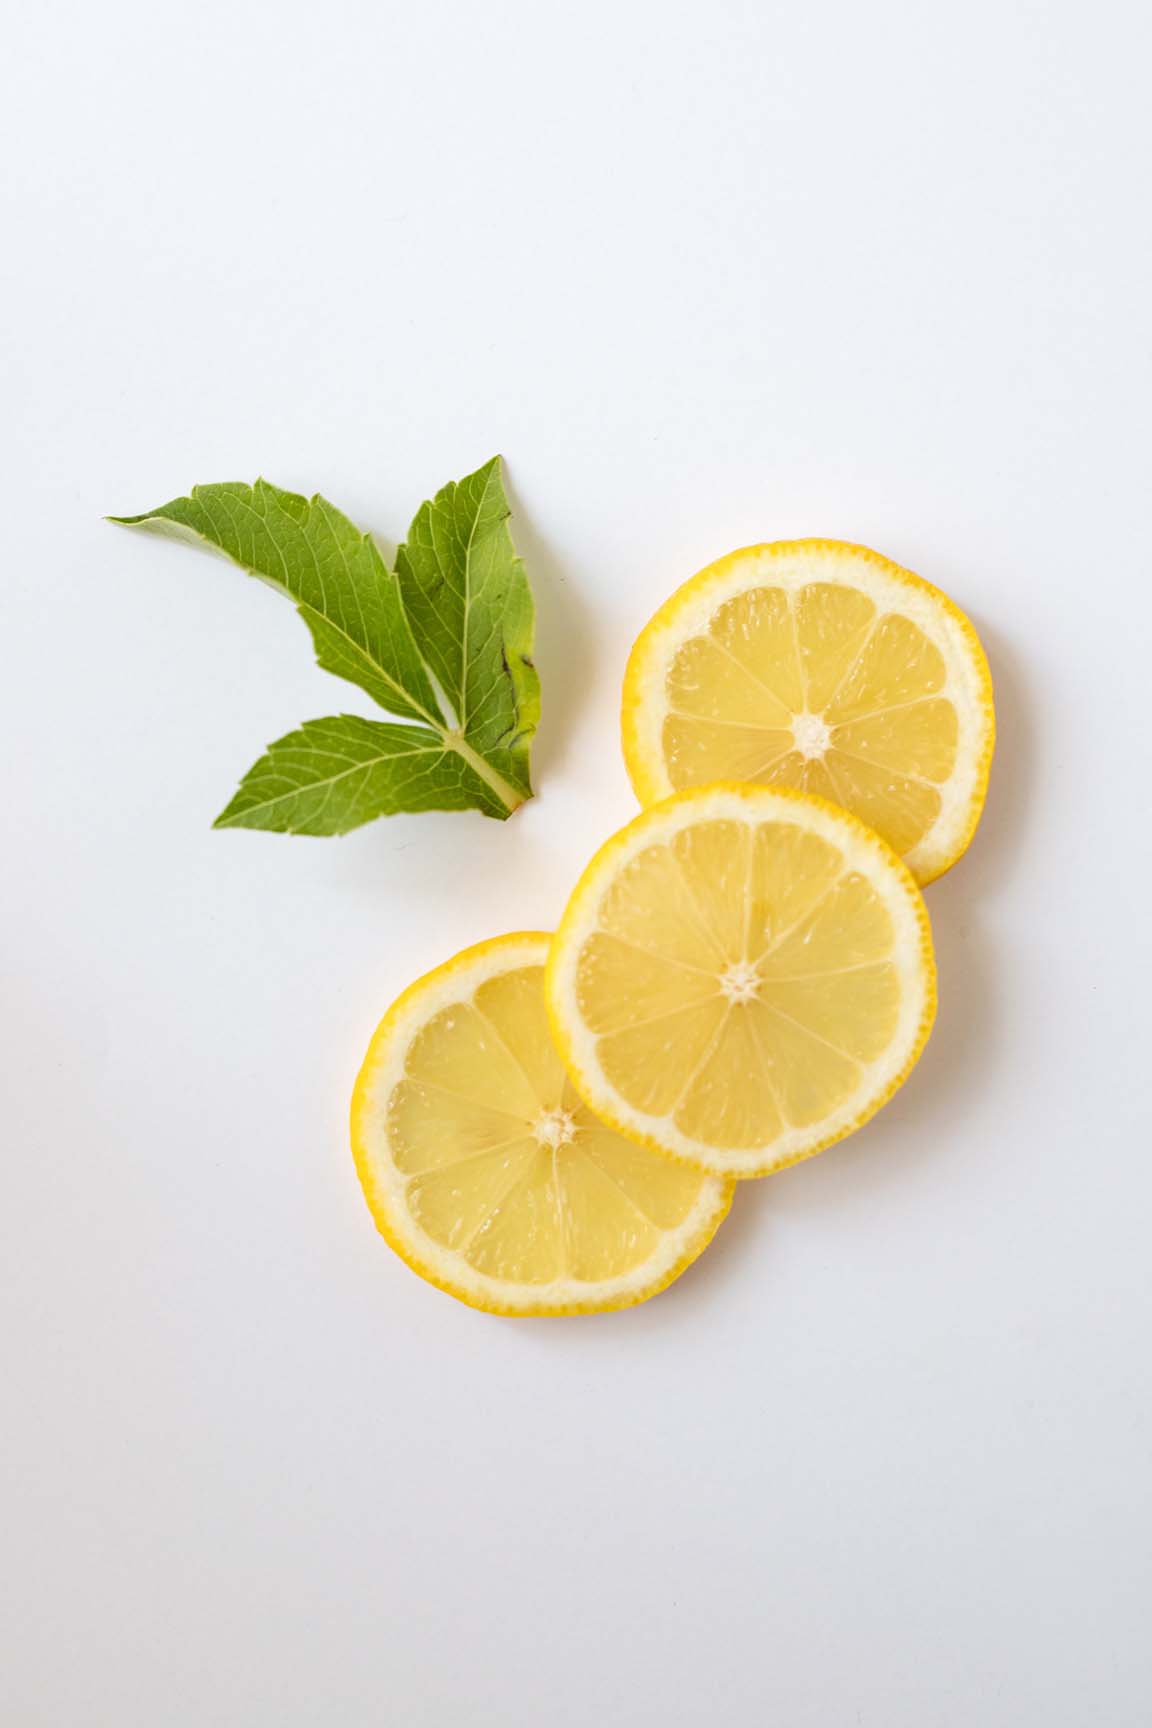 روشن کردن پوست با لیمو